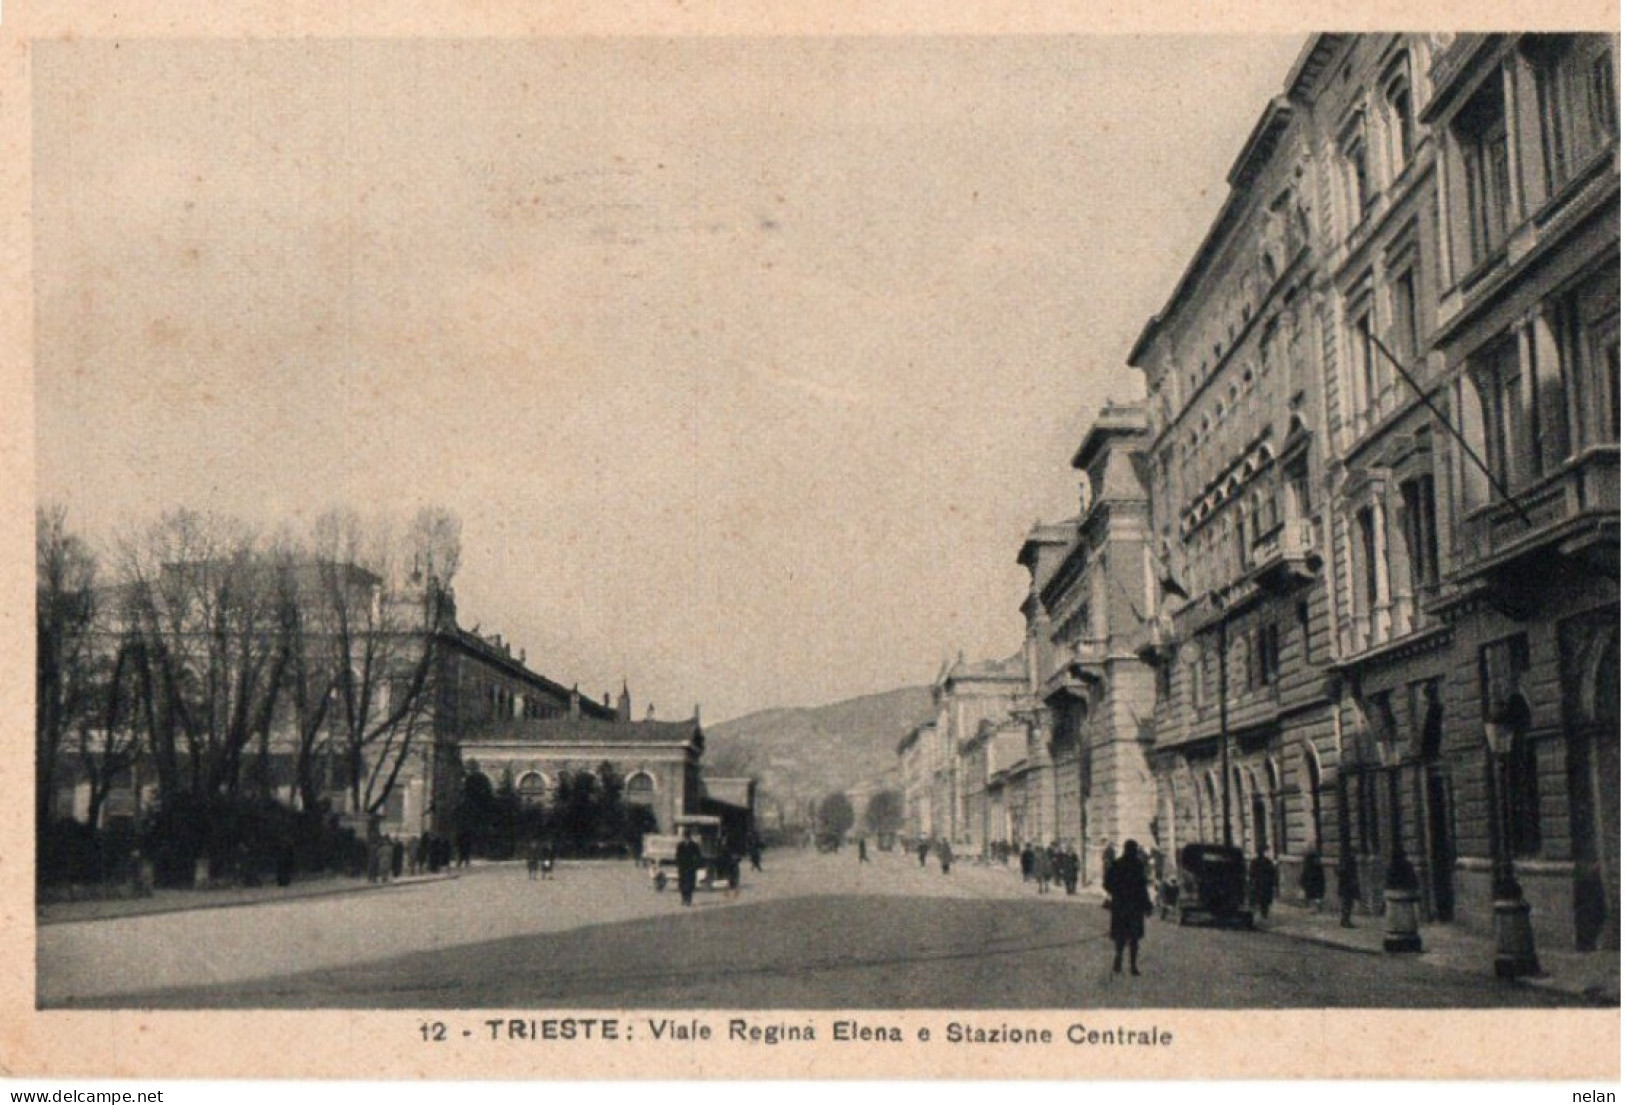 TRIESTE - VIALE REGINA ELENA E STAZIONE CENTRALE - F.P. - Trieste (Triest)